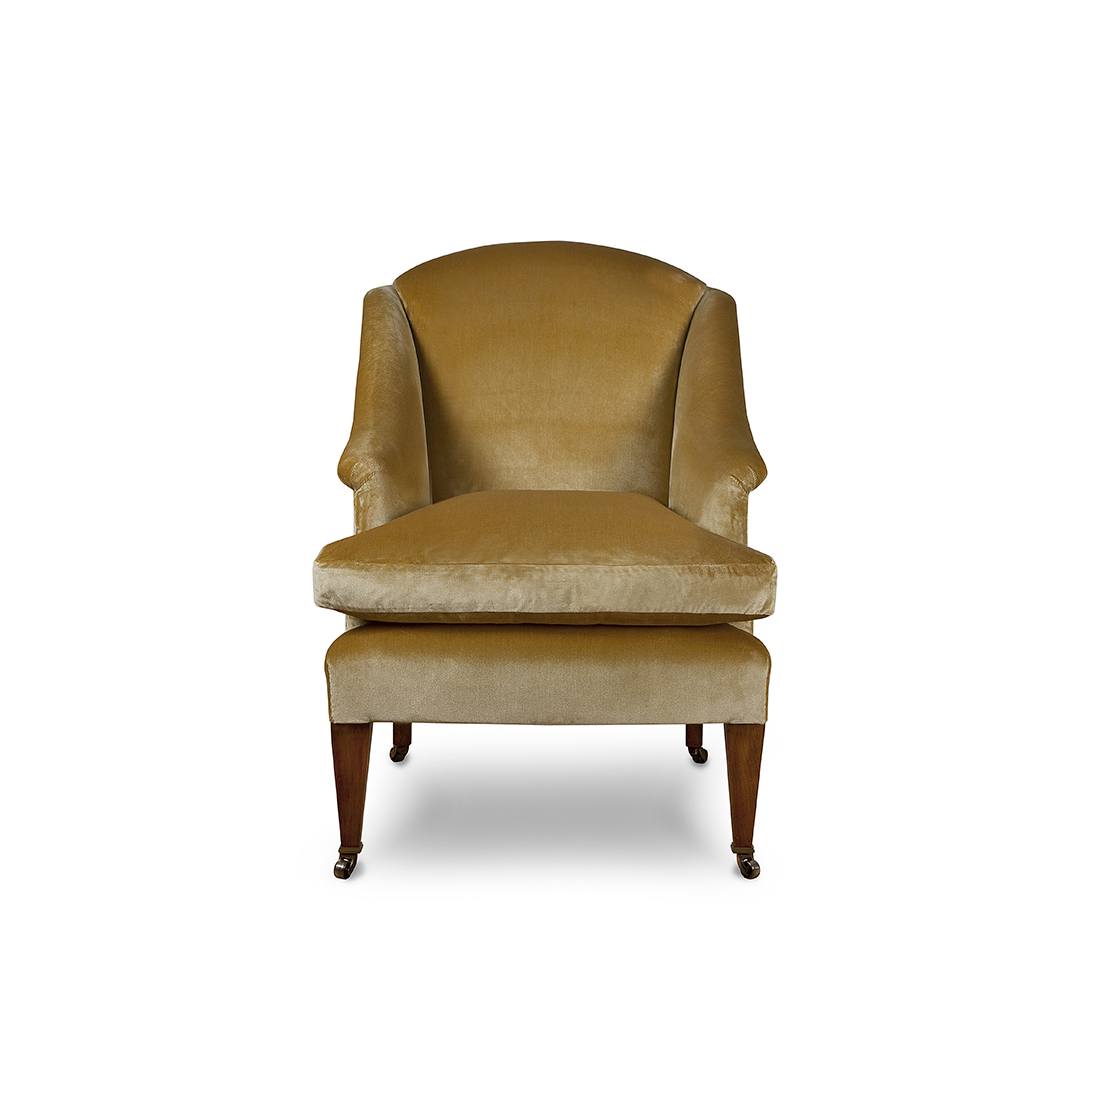 Fielding chair in Capri silk velvet - Almond - Beaumont & Fletcher